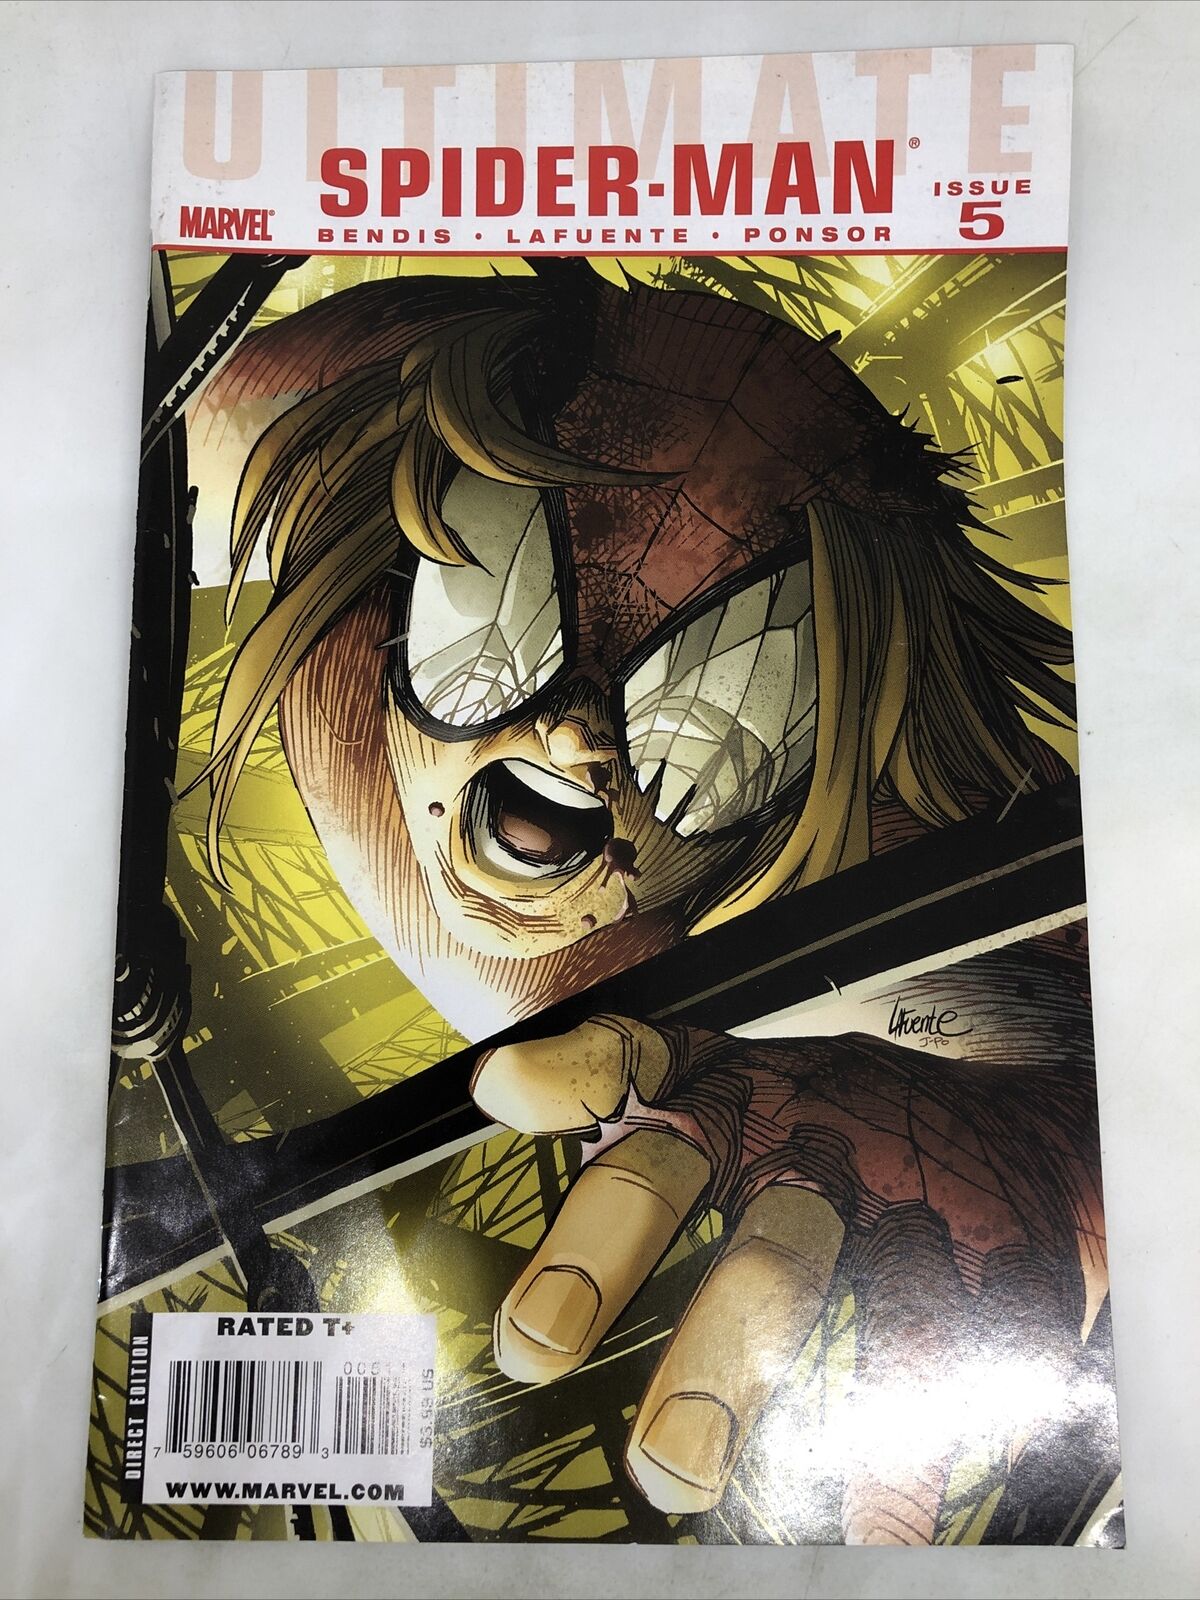 Marvel Comics Spider-Man Issue #5 Bedis • Lafuente • Ponsor